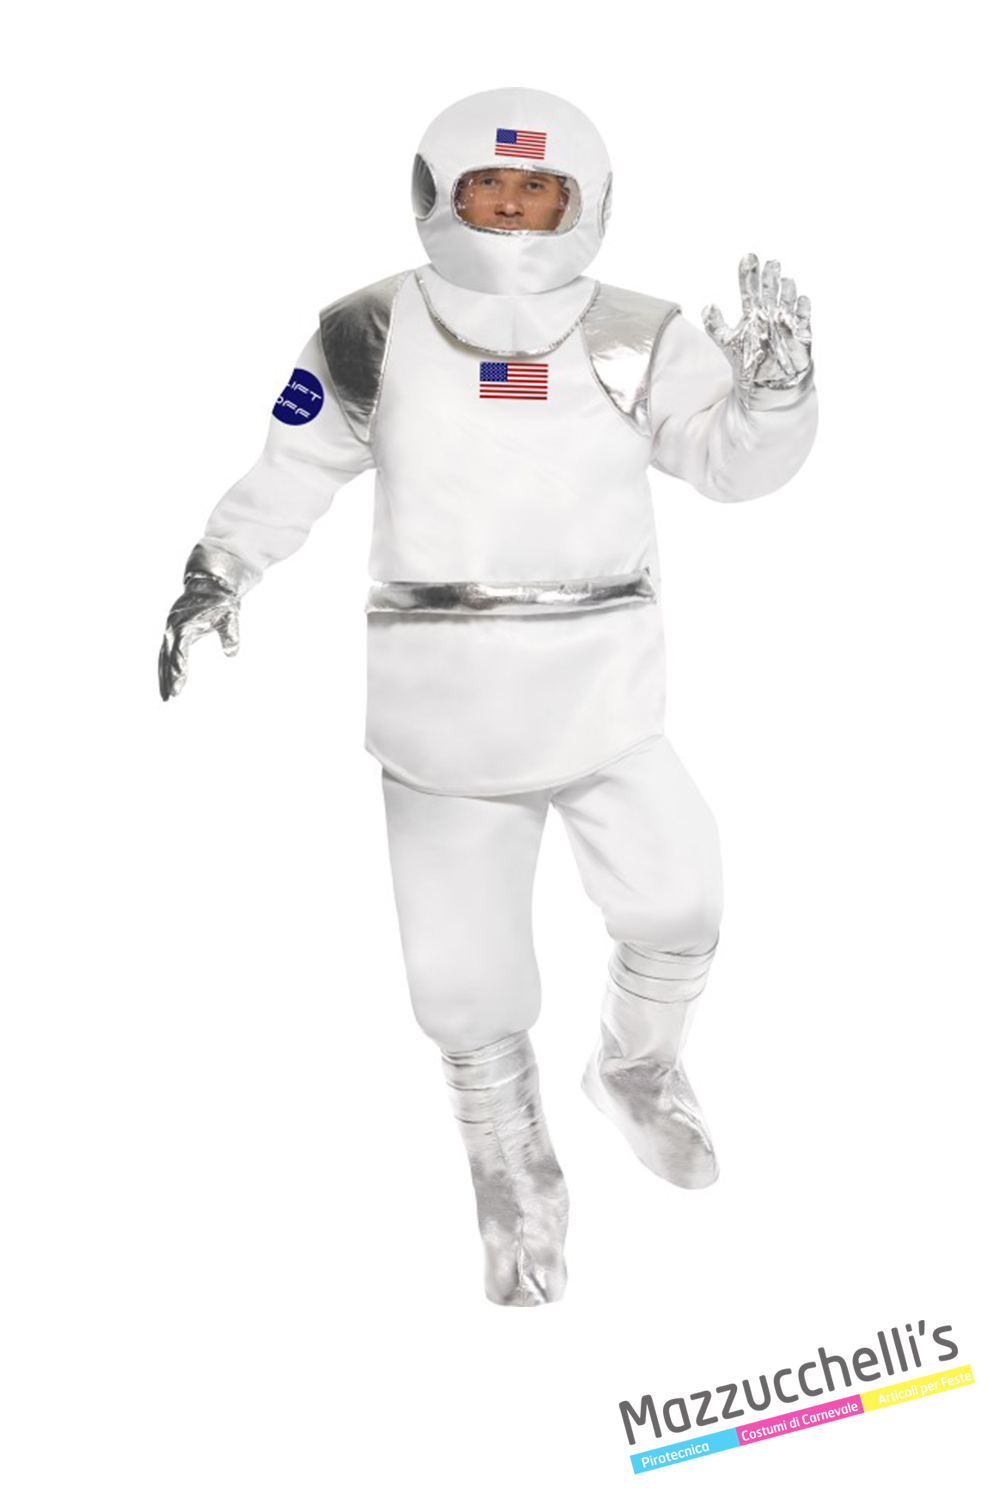 Costume Astronauta in vendita a Samarate Varese da Mazzucchellis